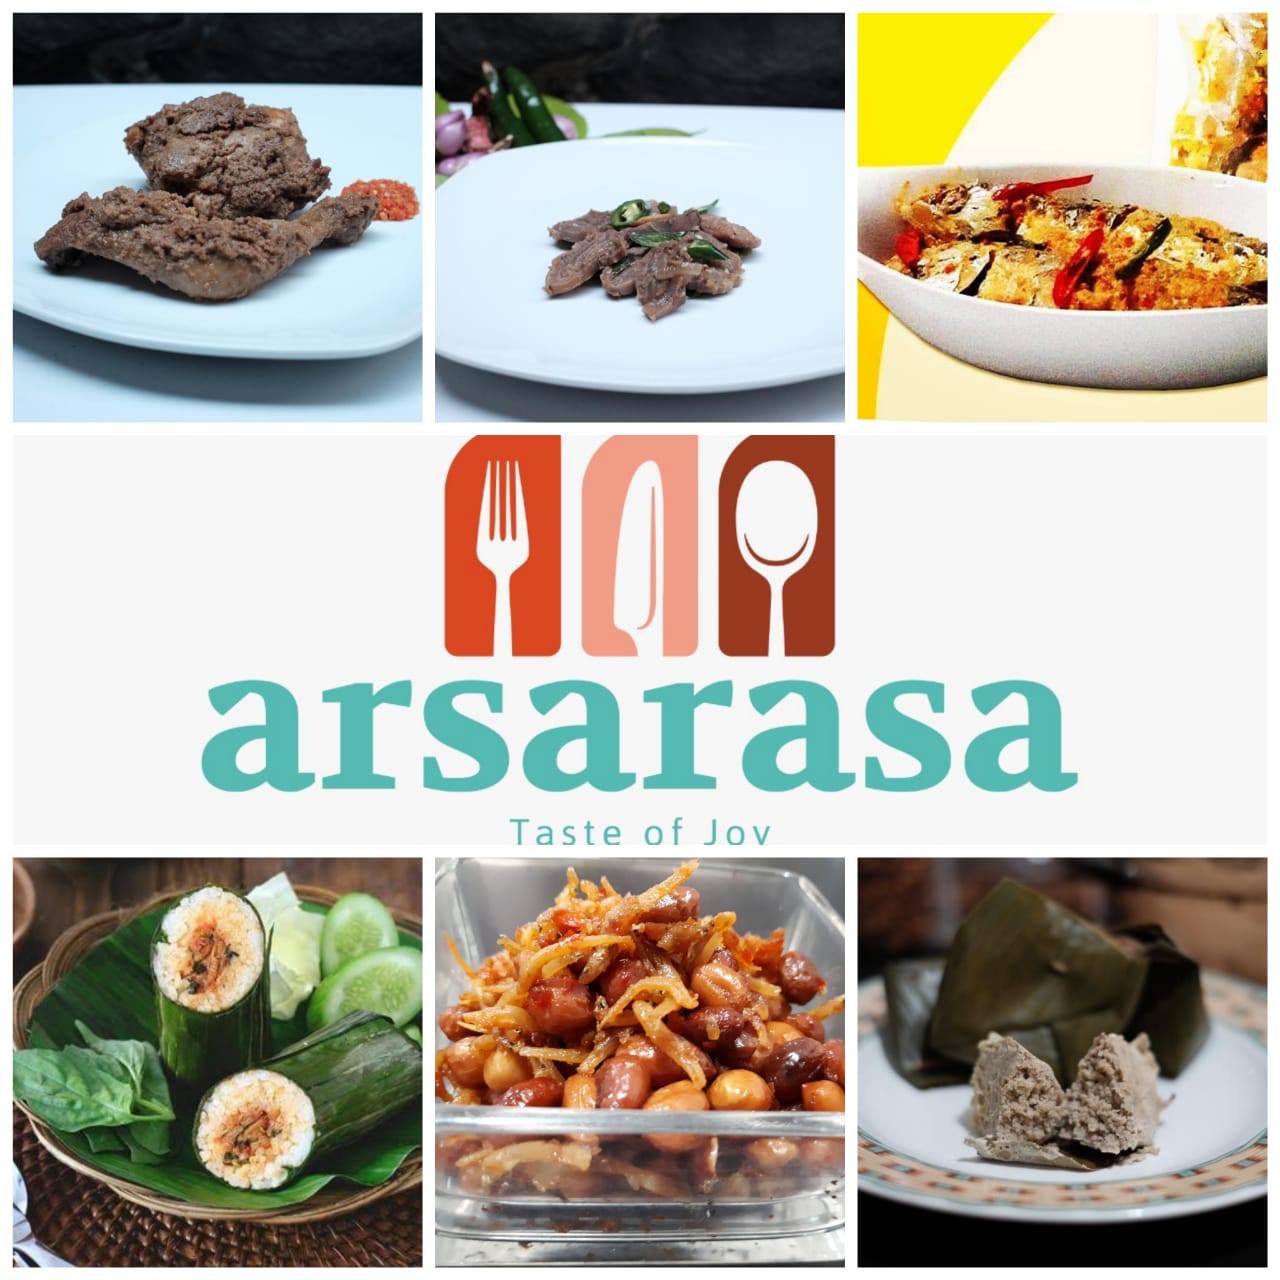 Arsarasa taste of joy